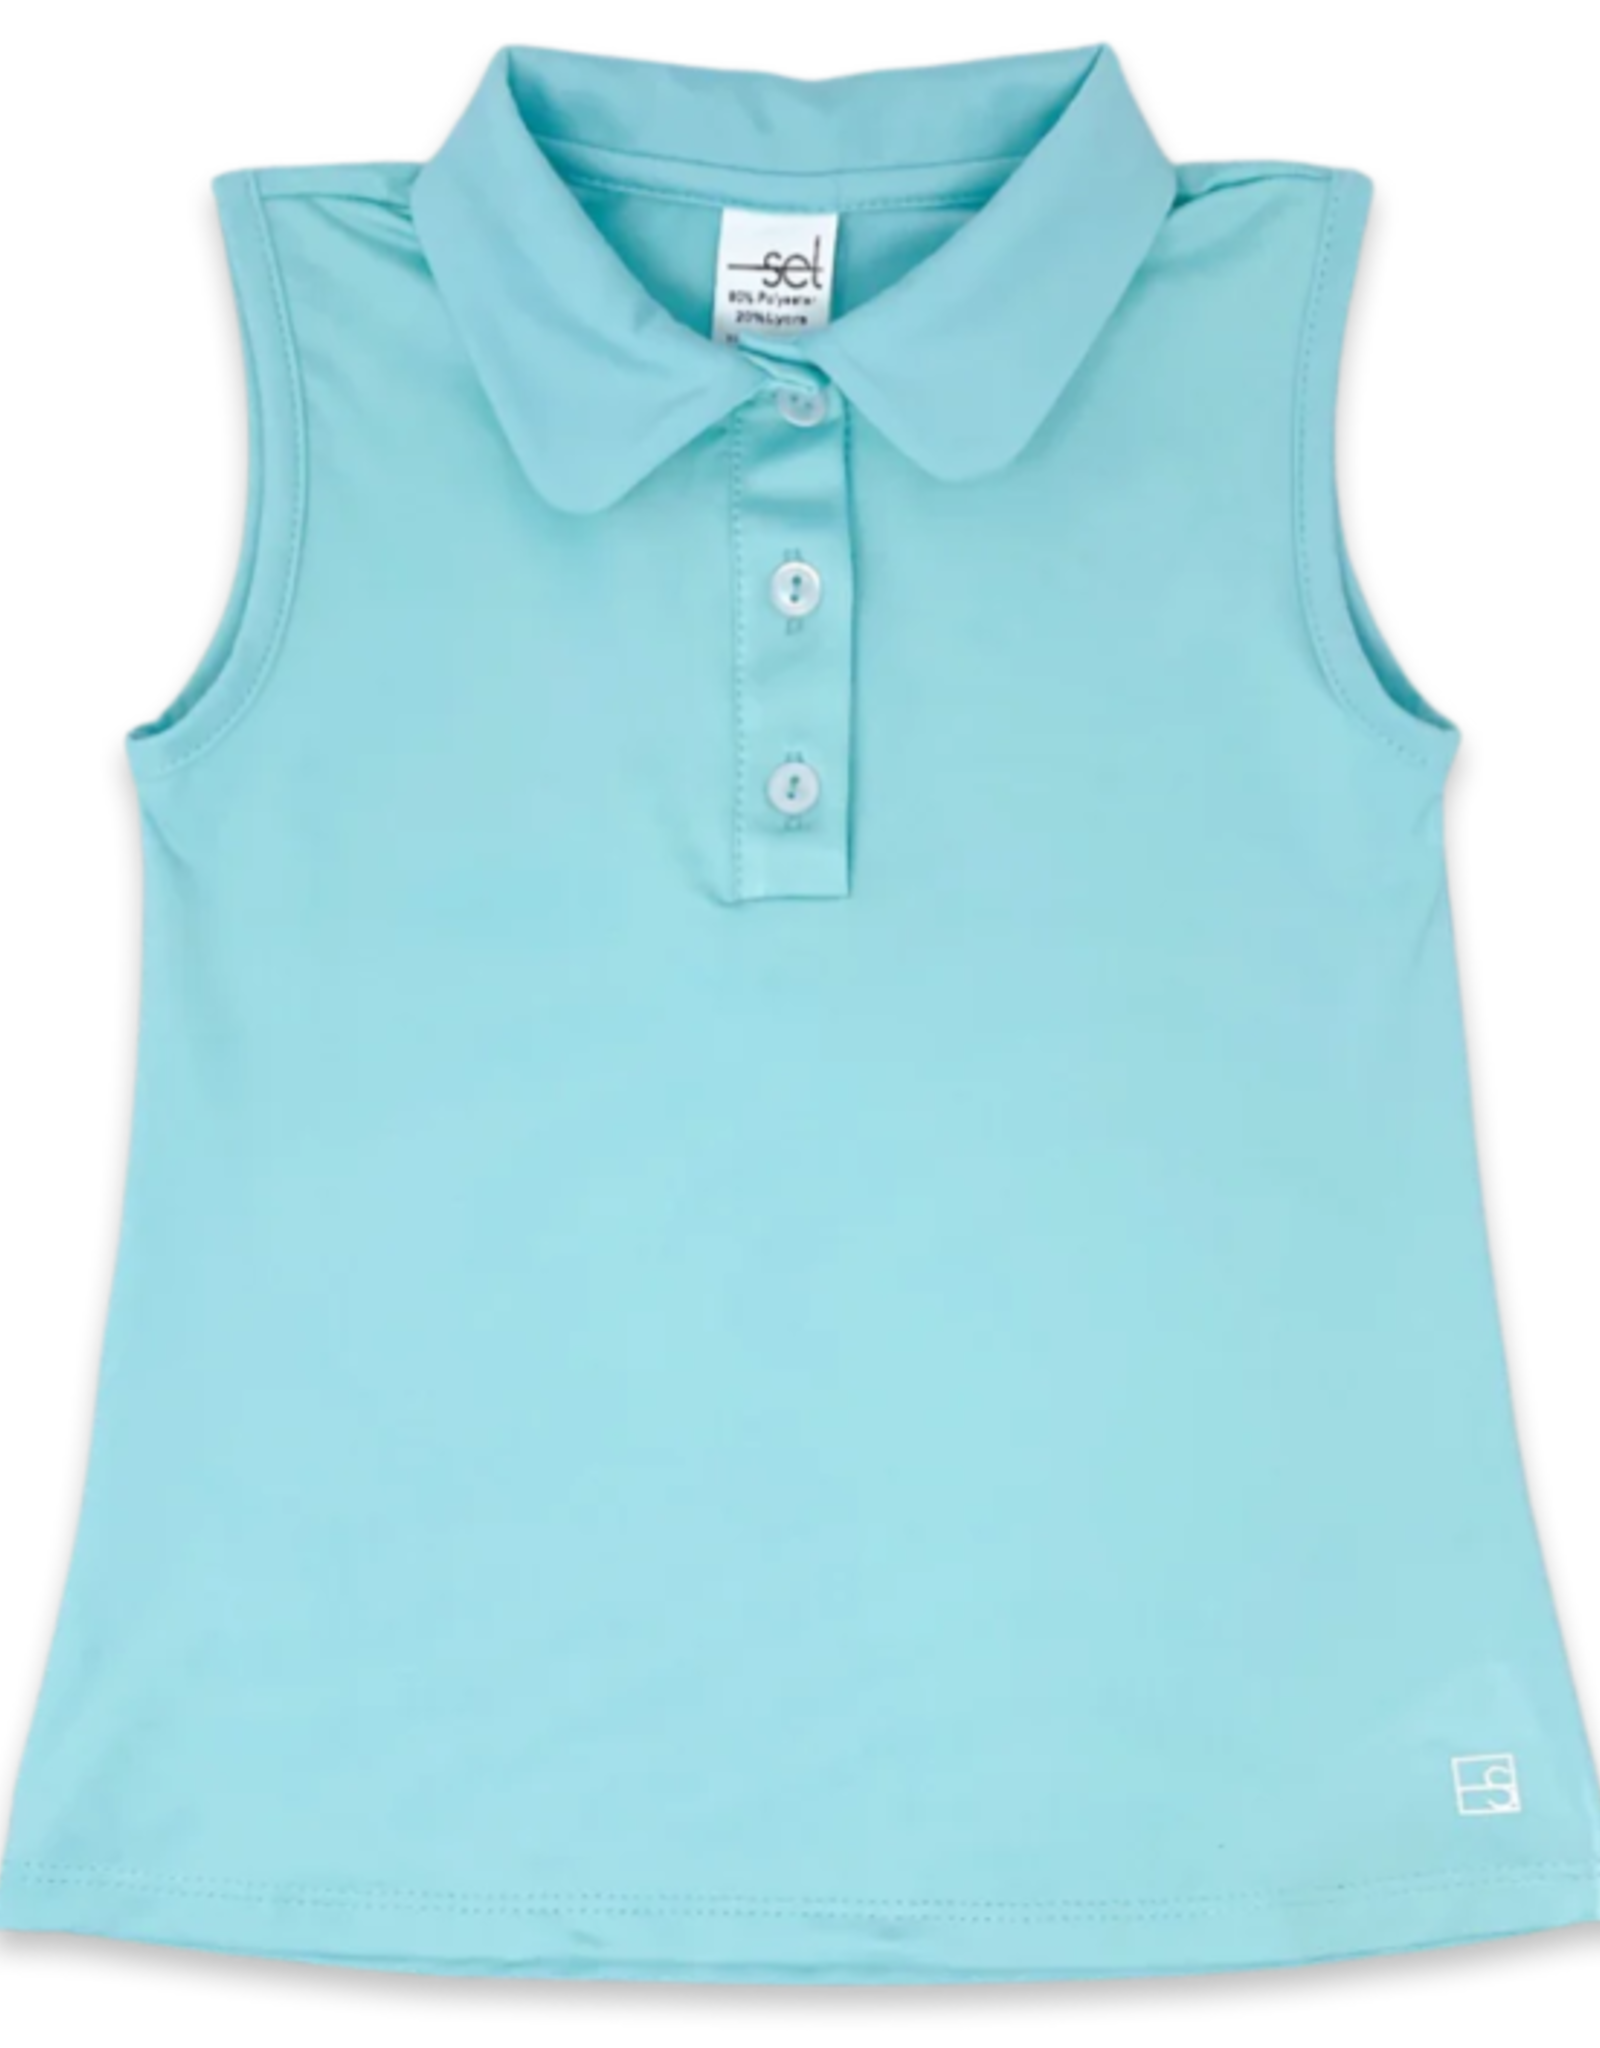 SET Gabby Shirt- Totally Turquoise